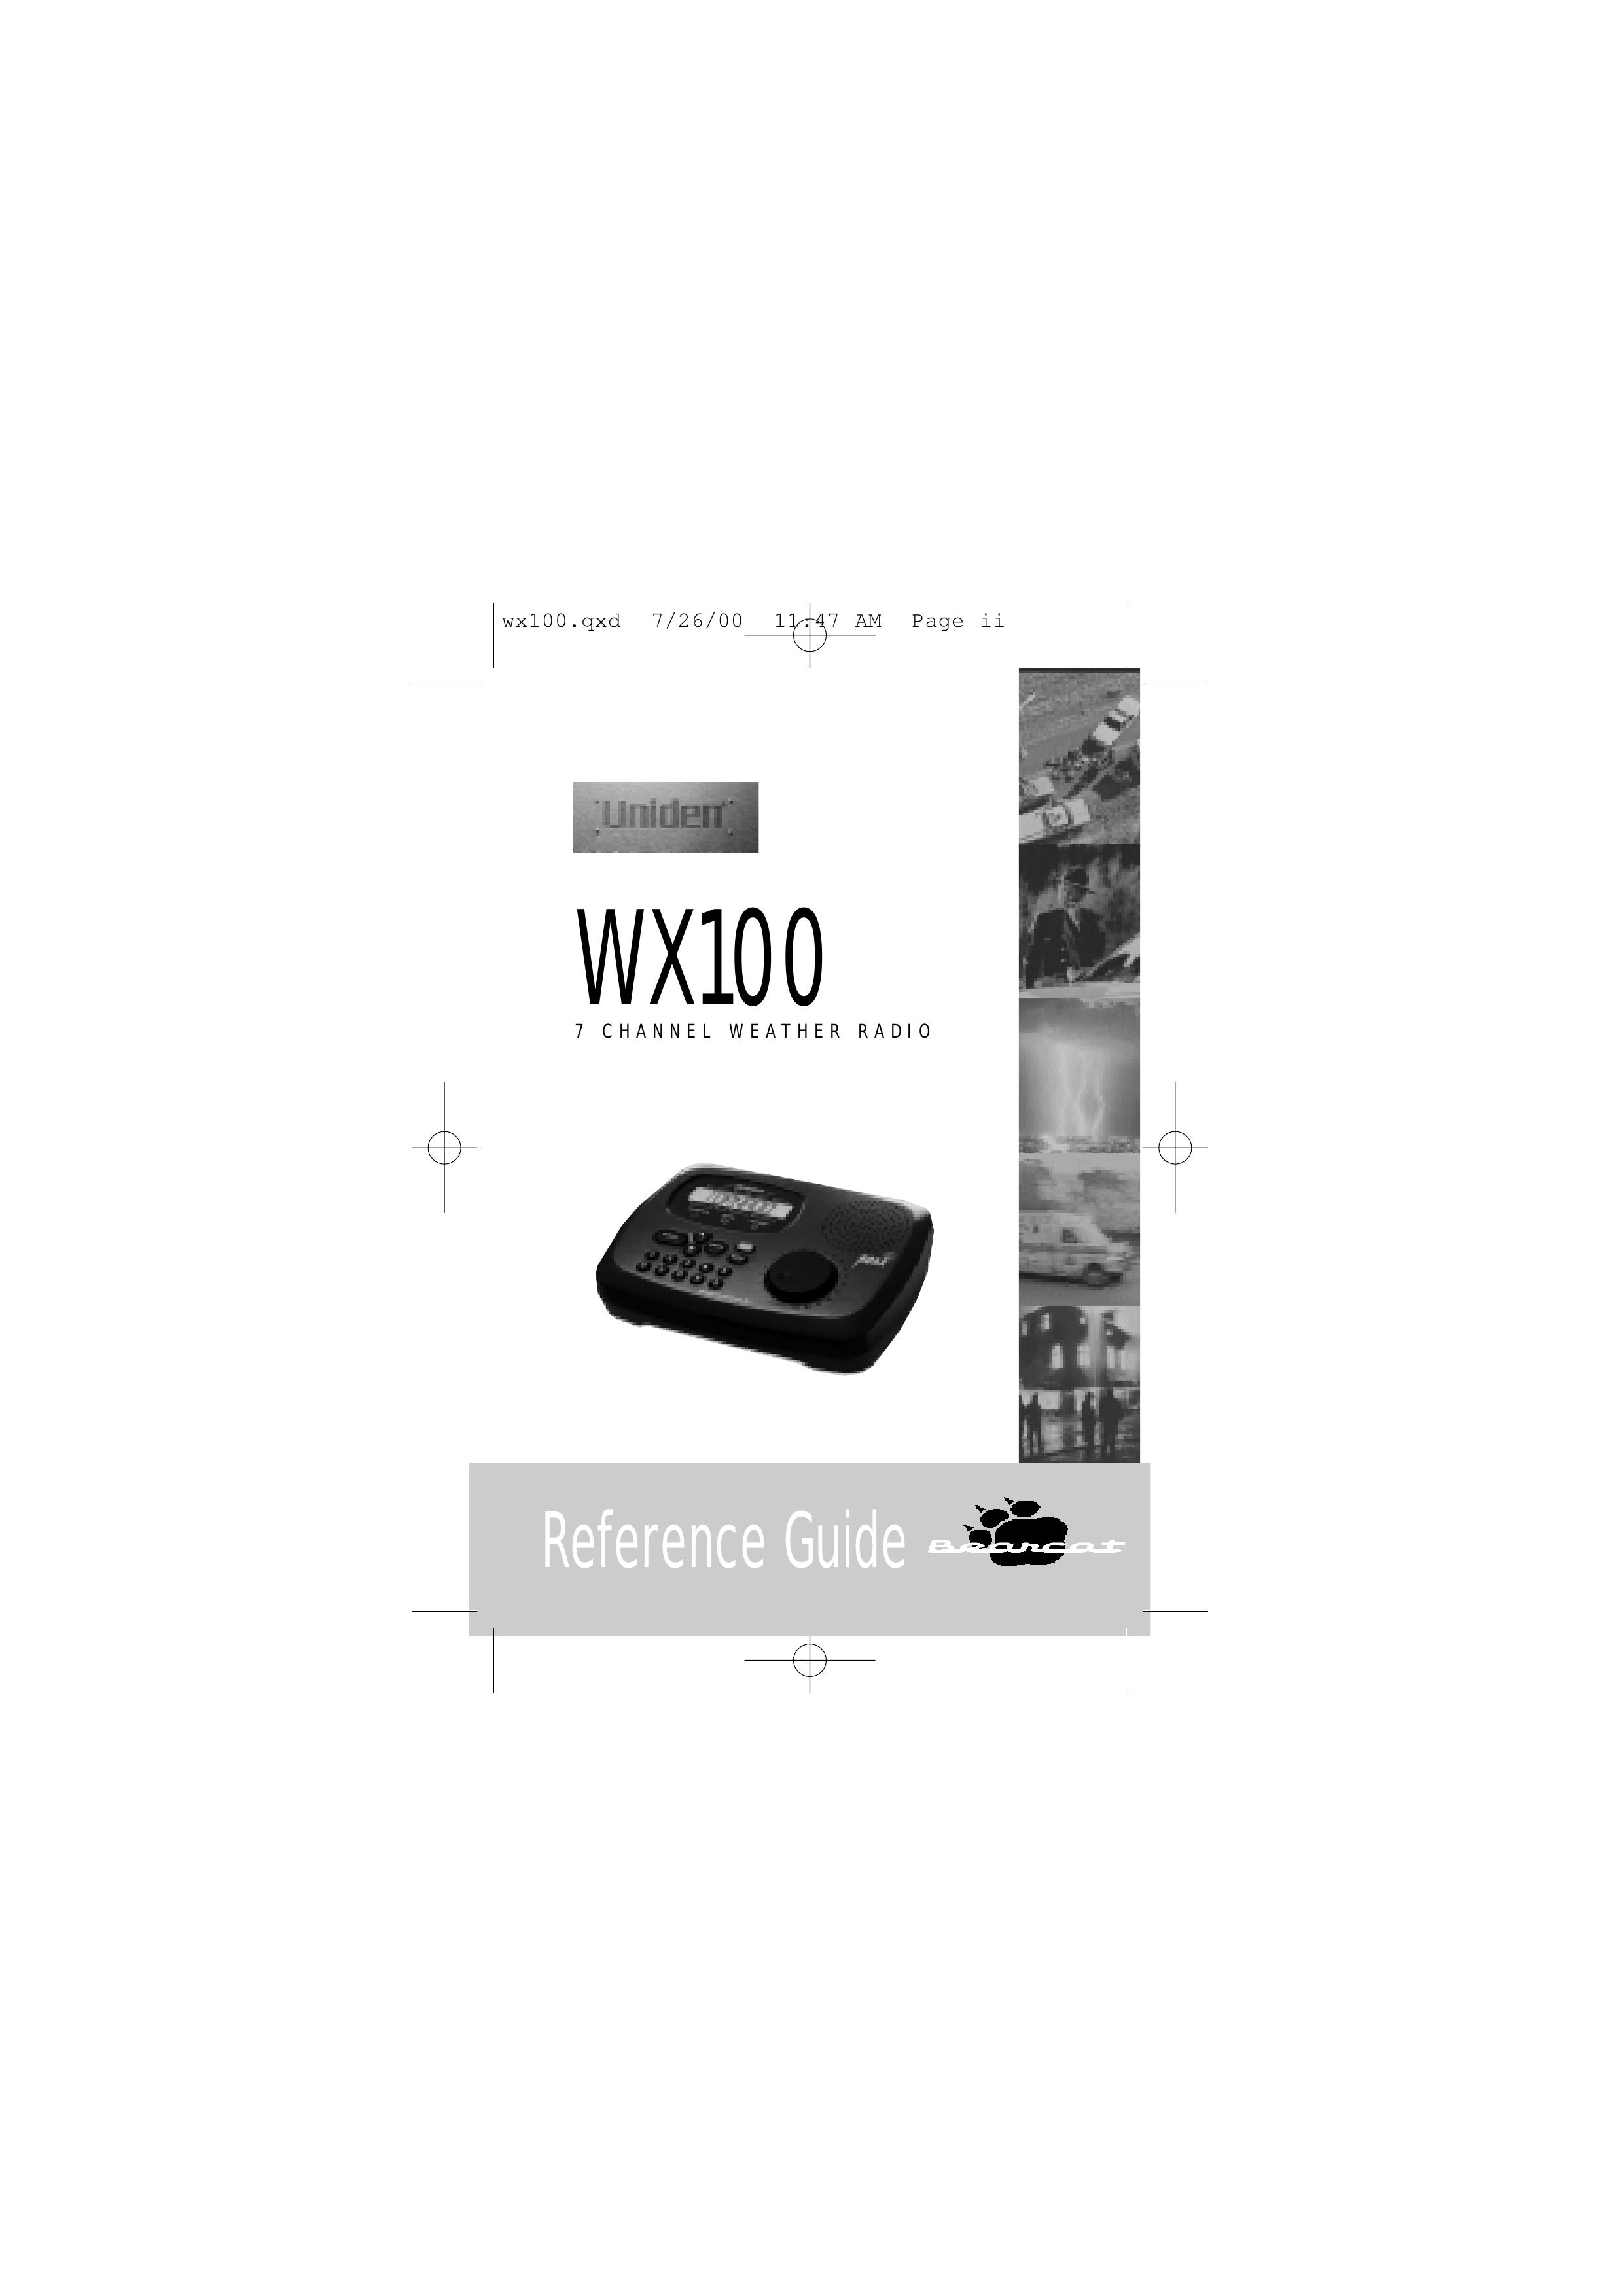 Uniden WX100 Weather Radio User Manual